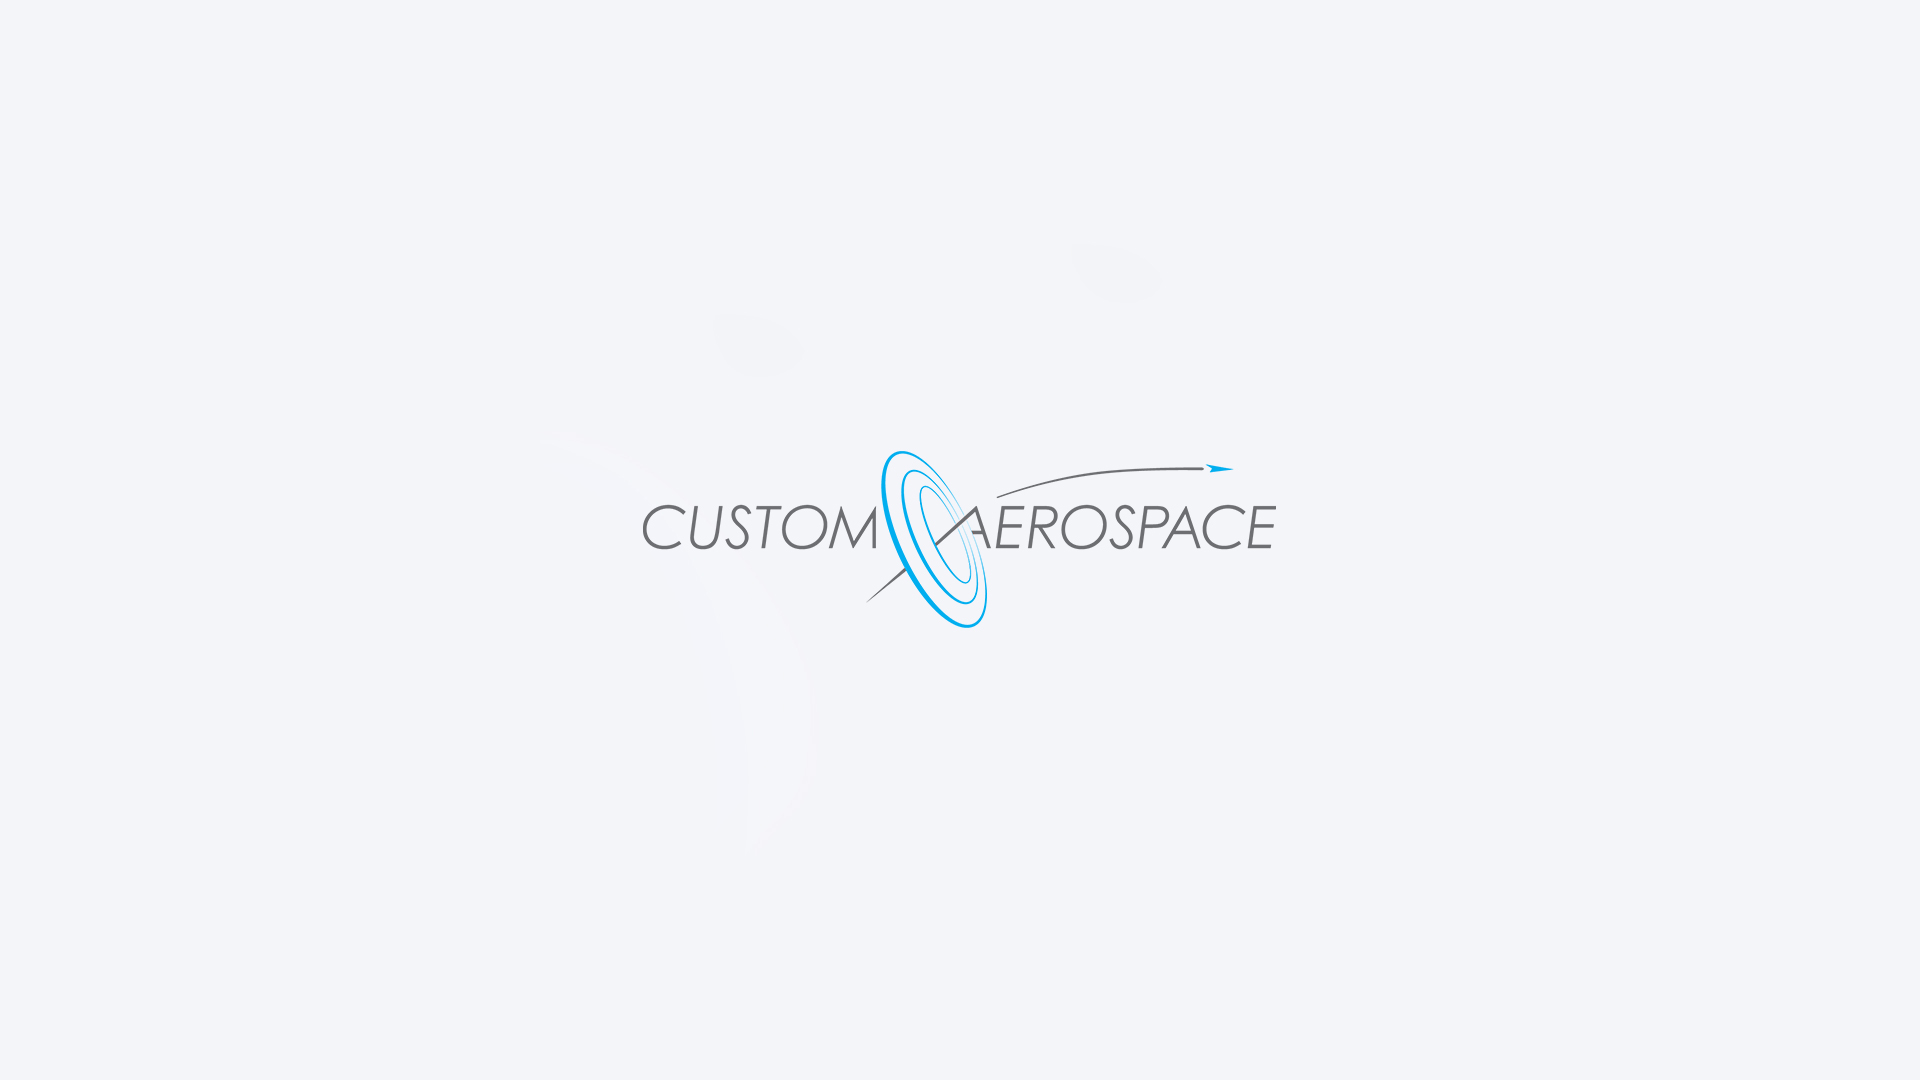 CUSTOM AEROSPACE joins the ROBOZE 3D PARTS NETWORK